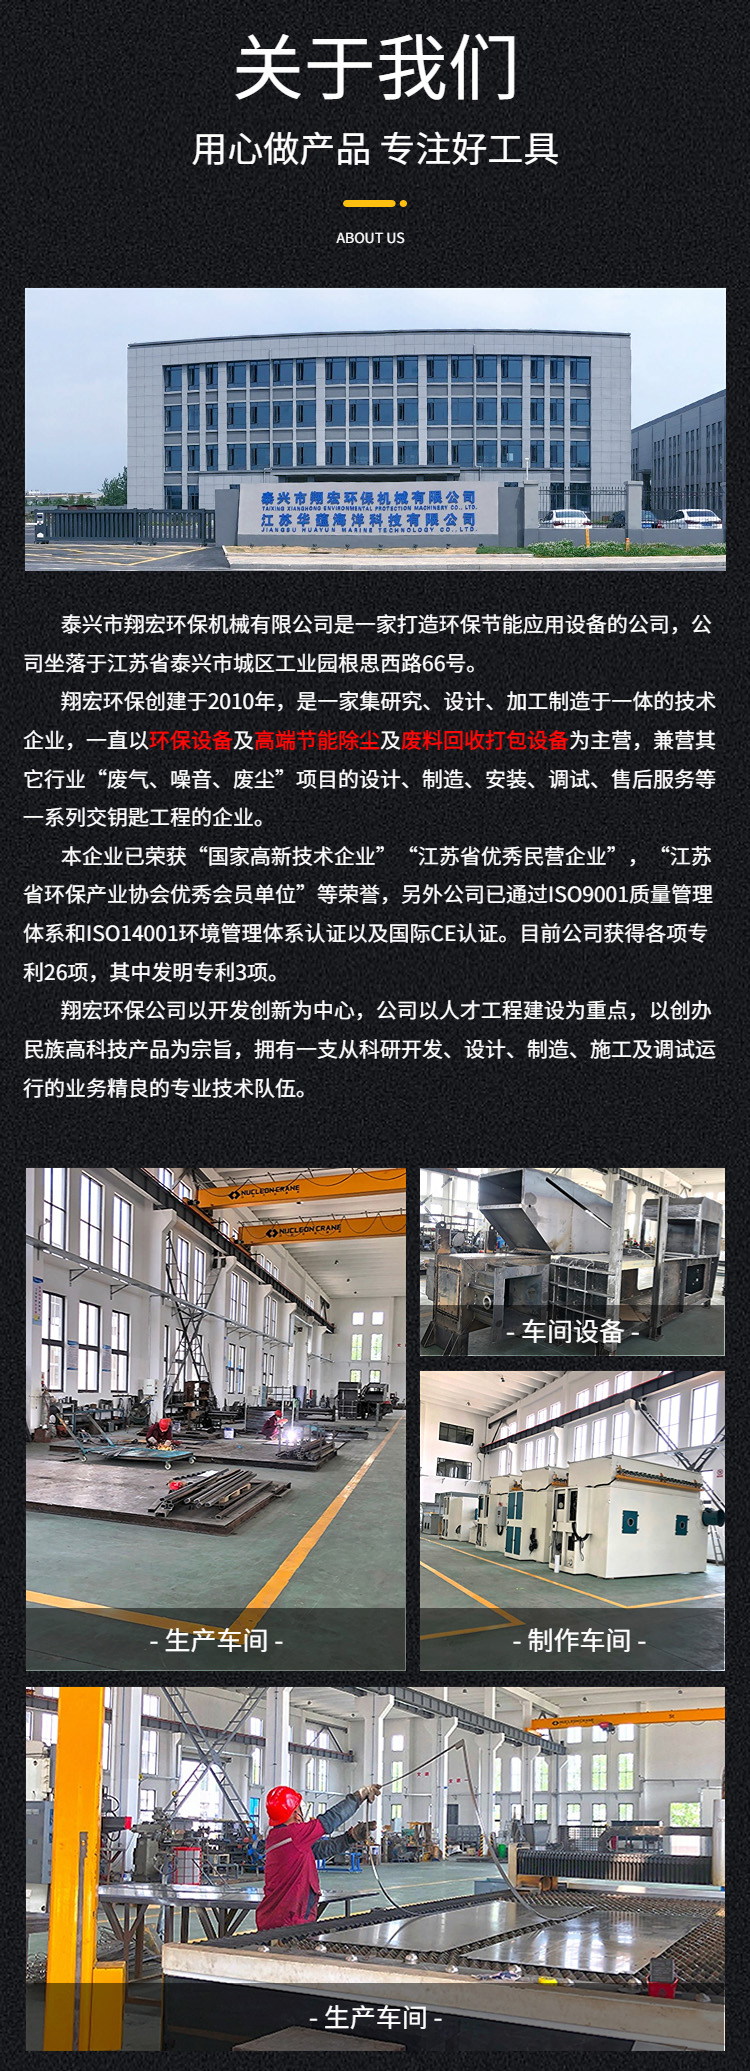 Xianghong Farm Fully Automatic Horizontal Straw Compressor Grain Wheat Straw Block Baling Machine Hydraulic Baling Machine Manufacturer